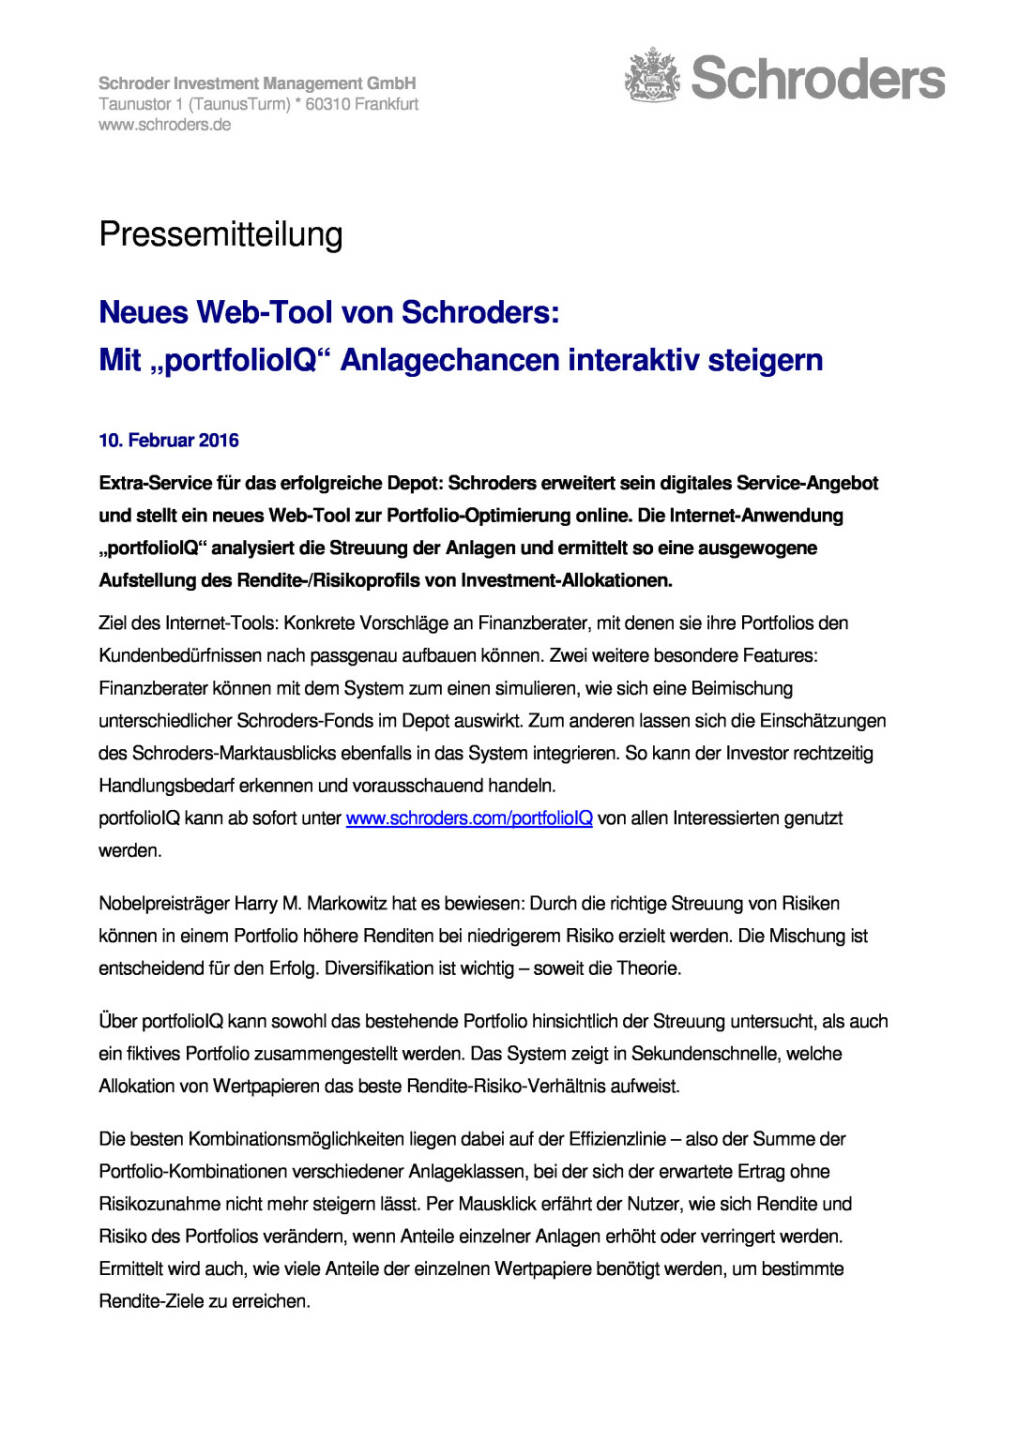 Neues Web-Tool von Schroders, Seite 1/2, komplettes Dokument unter http://boerse-social.com/static/uploads/file_622_neues_web-tool_von_schroders.pdf